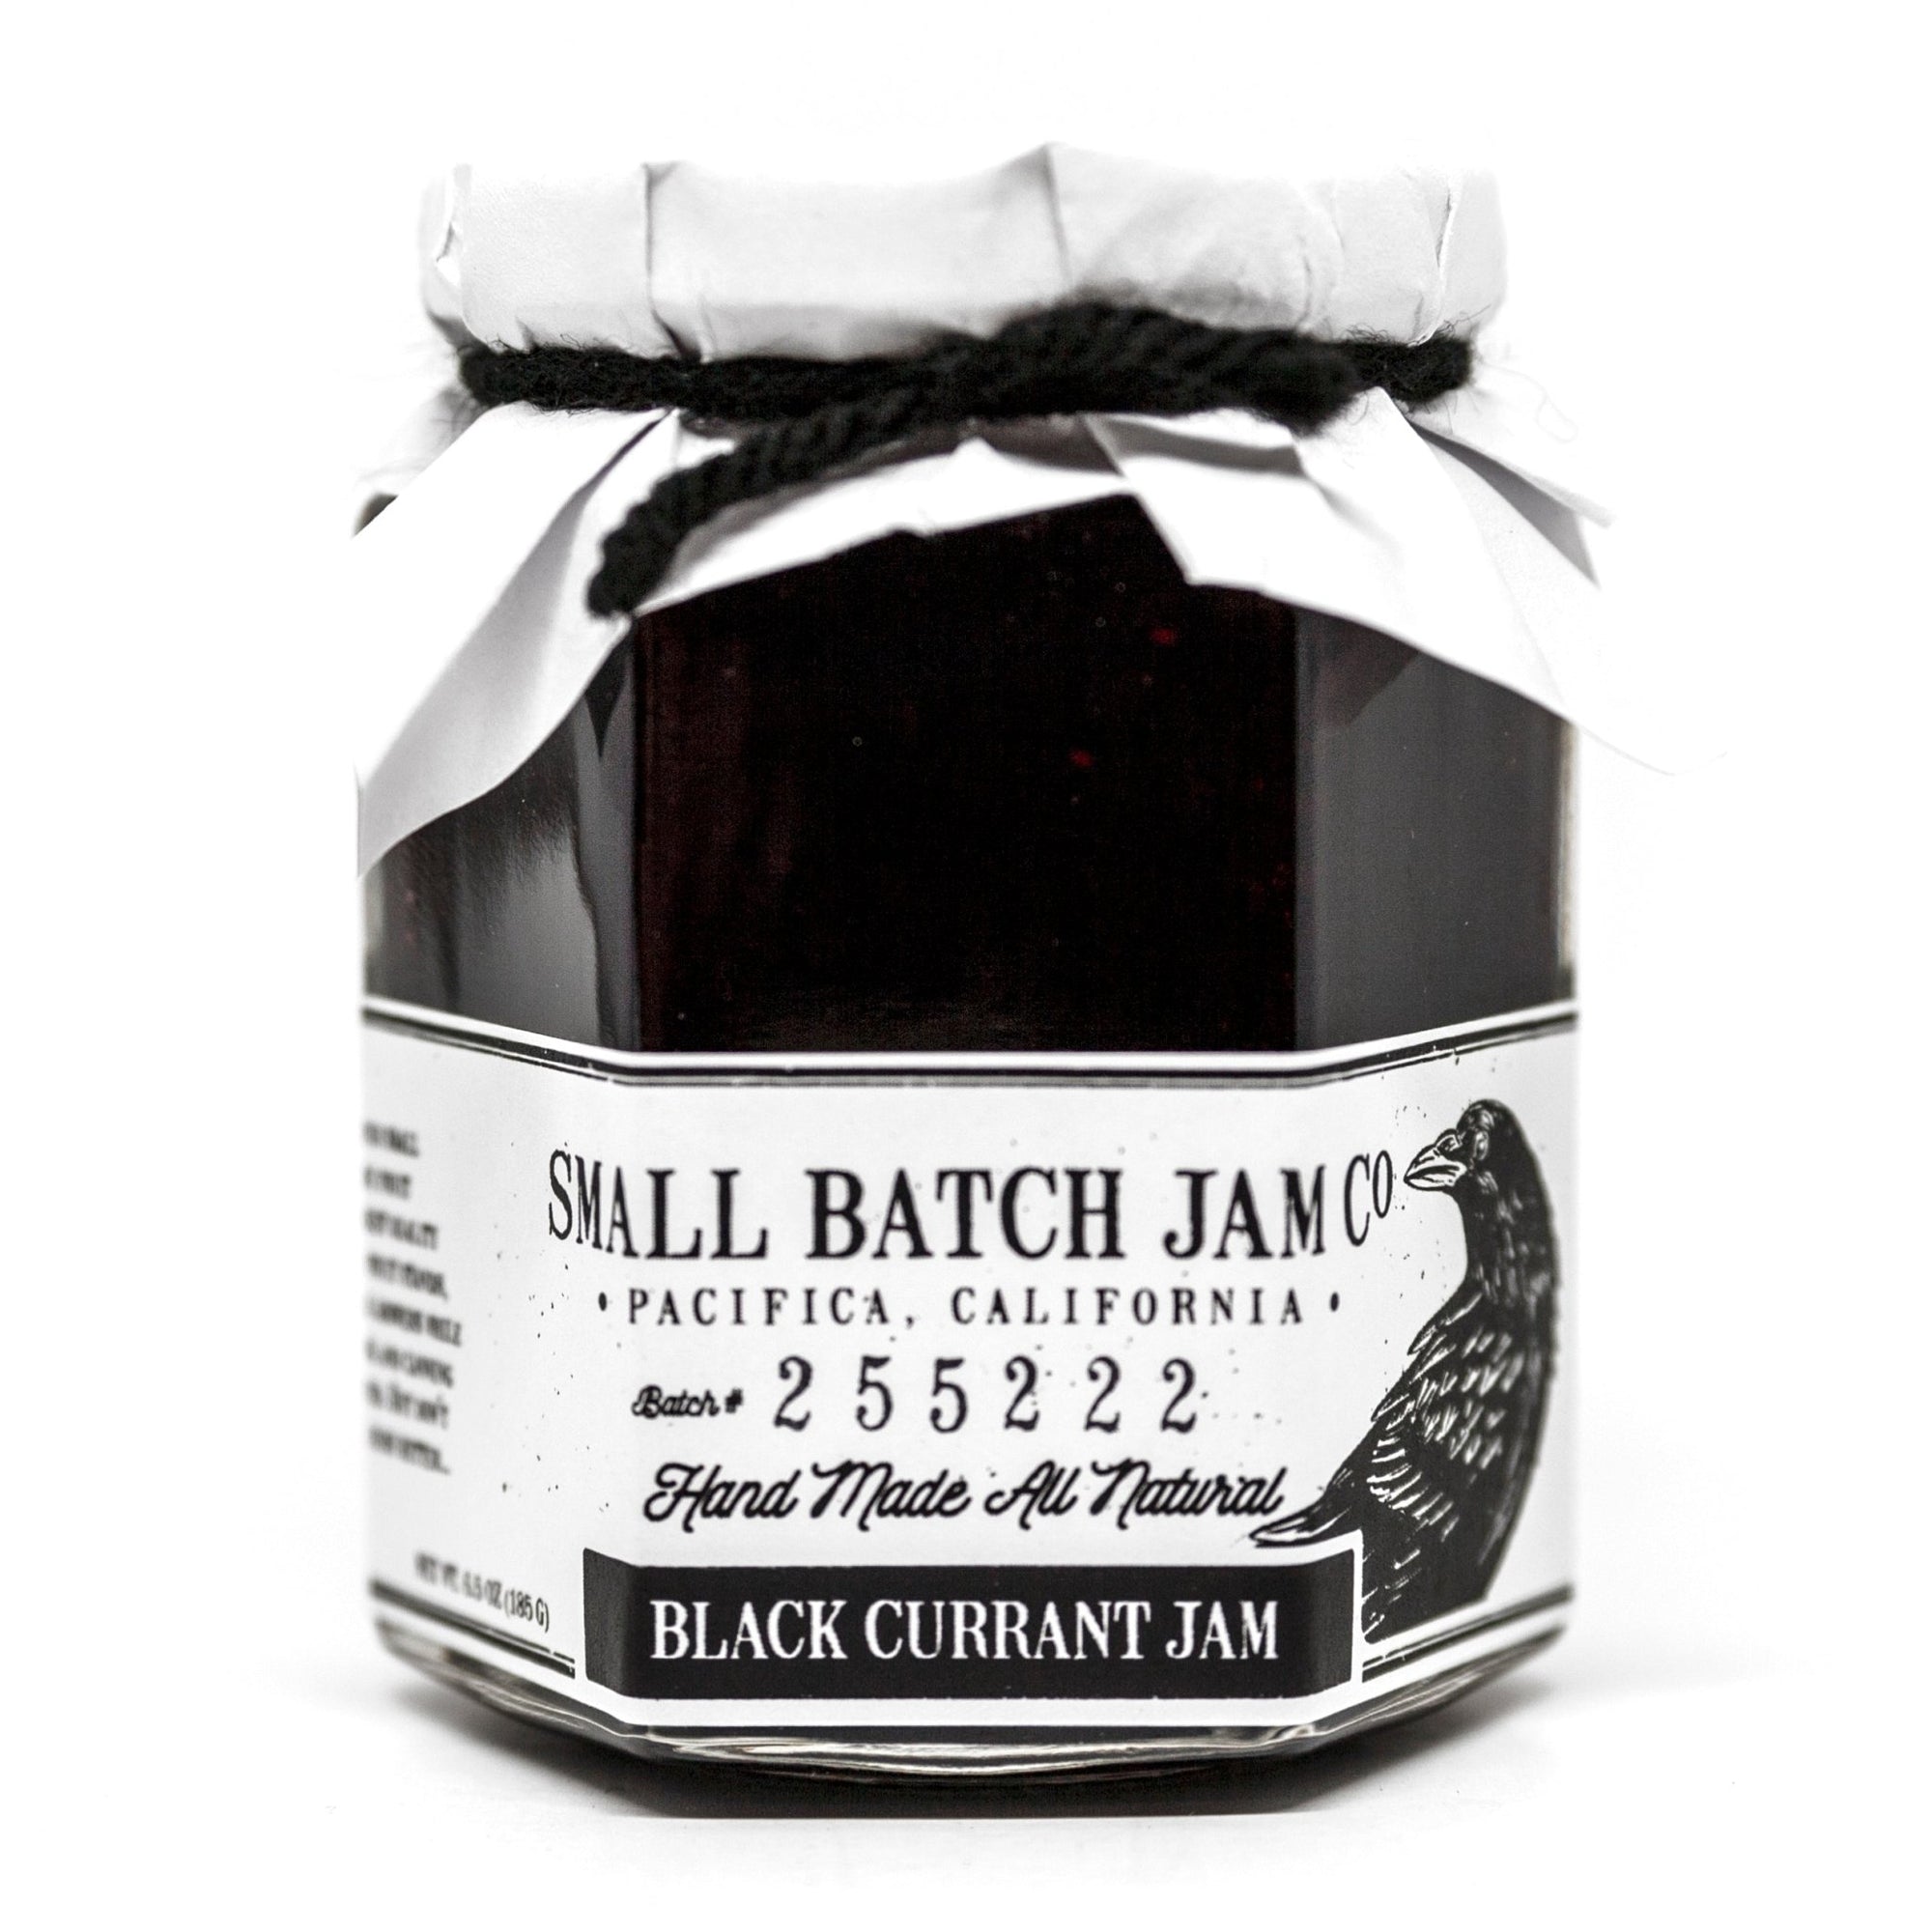 Black Currant Jam - Small Batch Jam Co